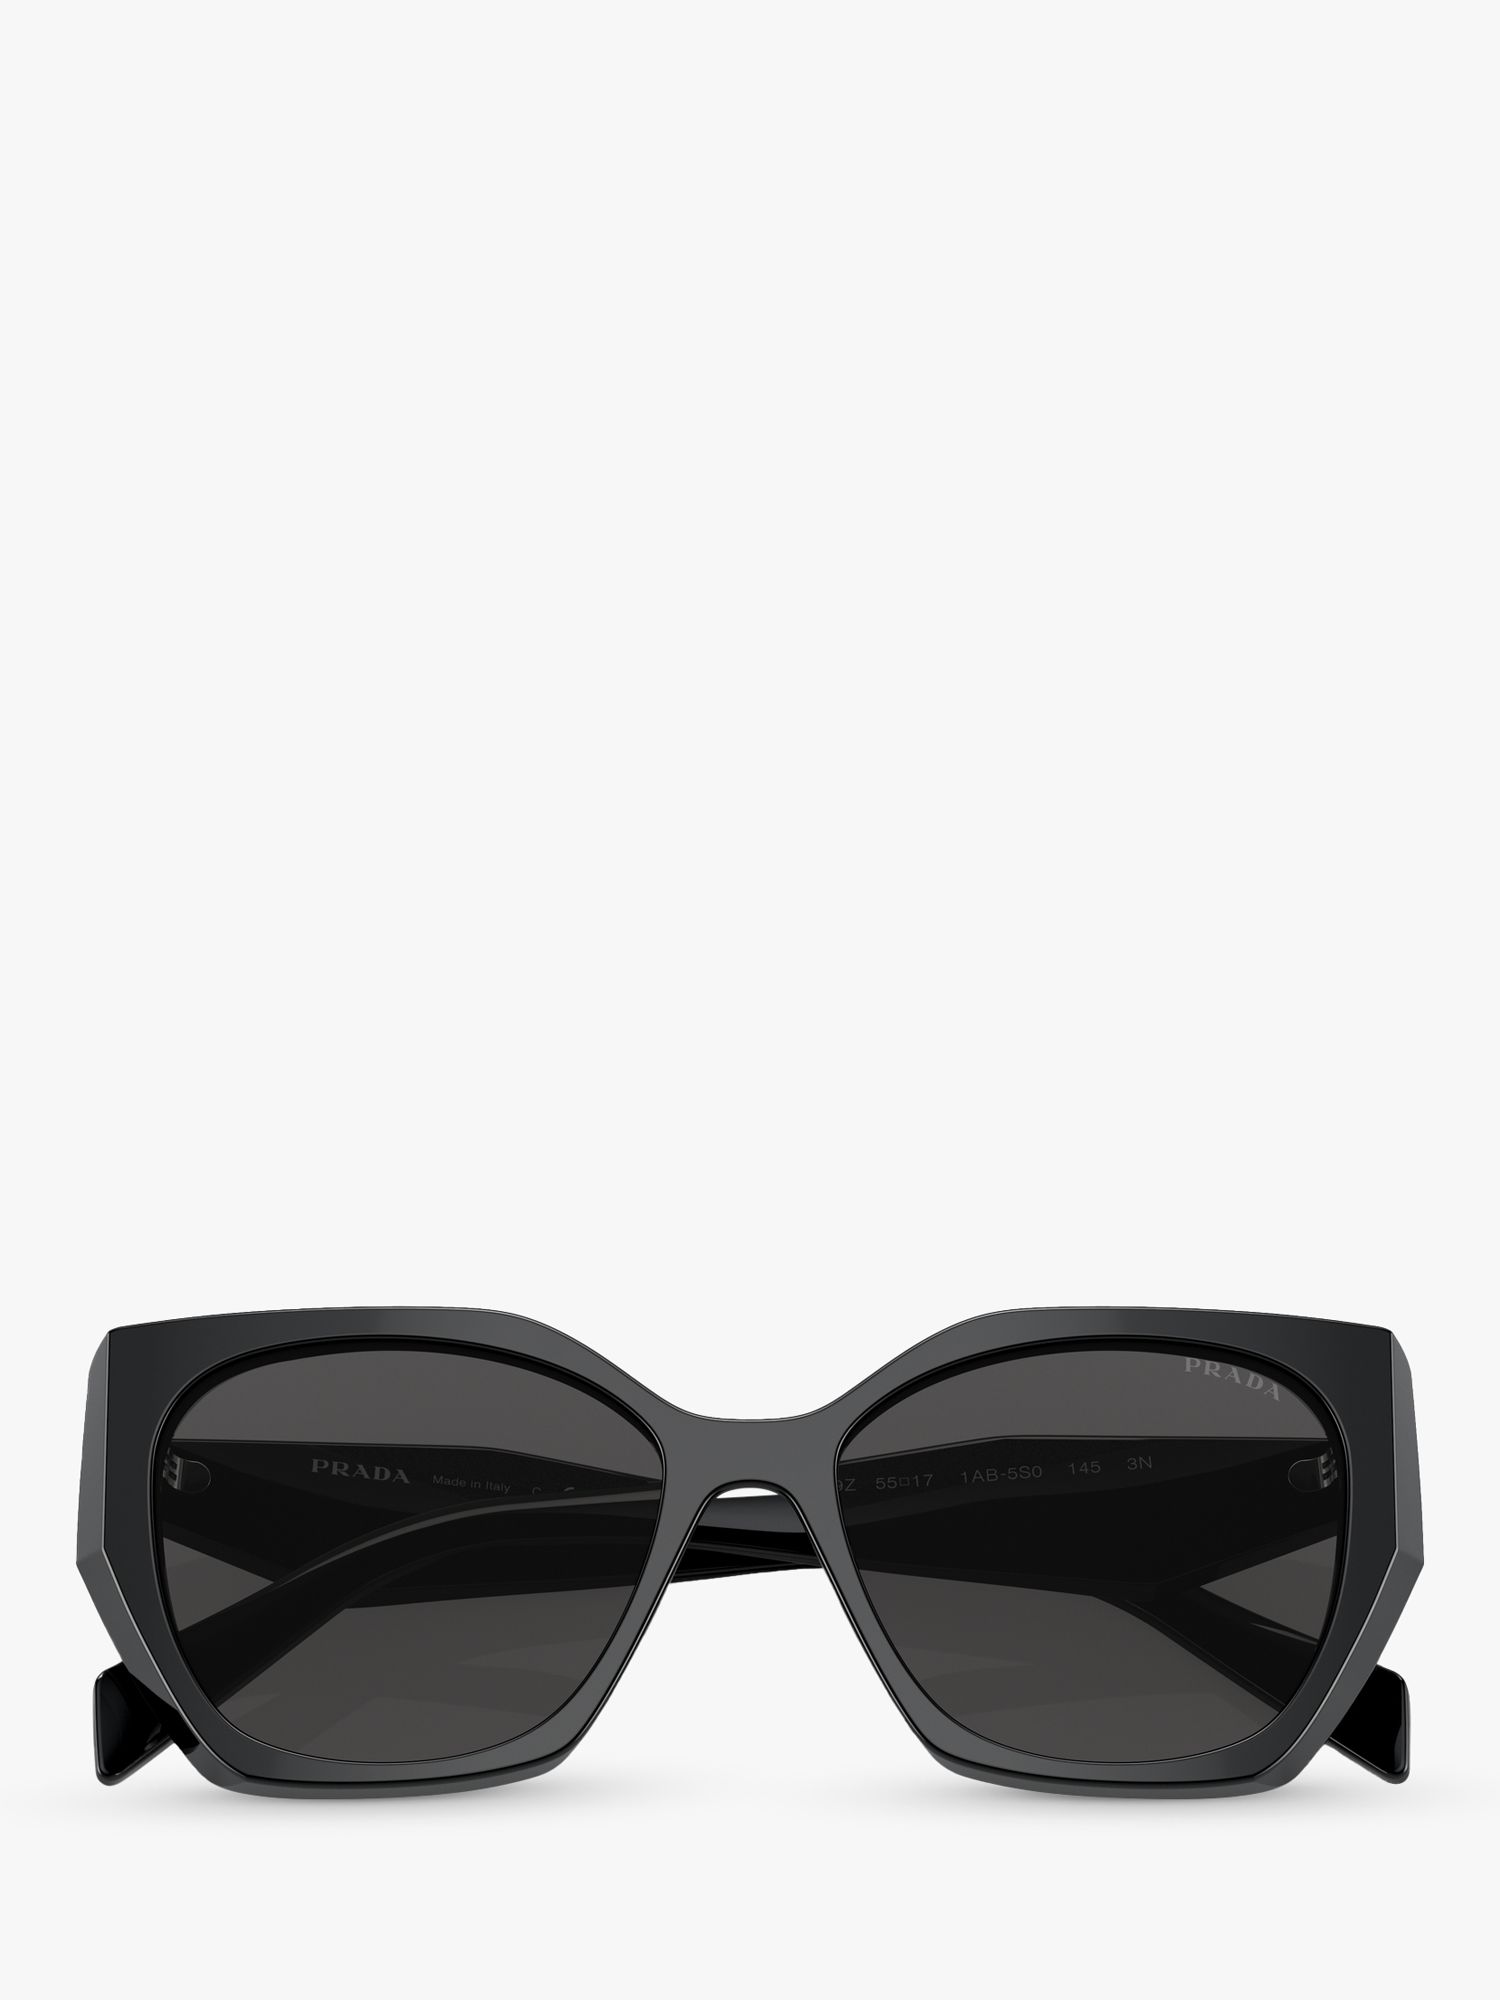 Prada PR 19ZS Women's Pillow Sunglasses, Black